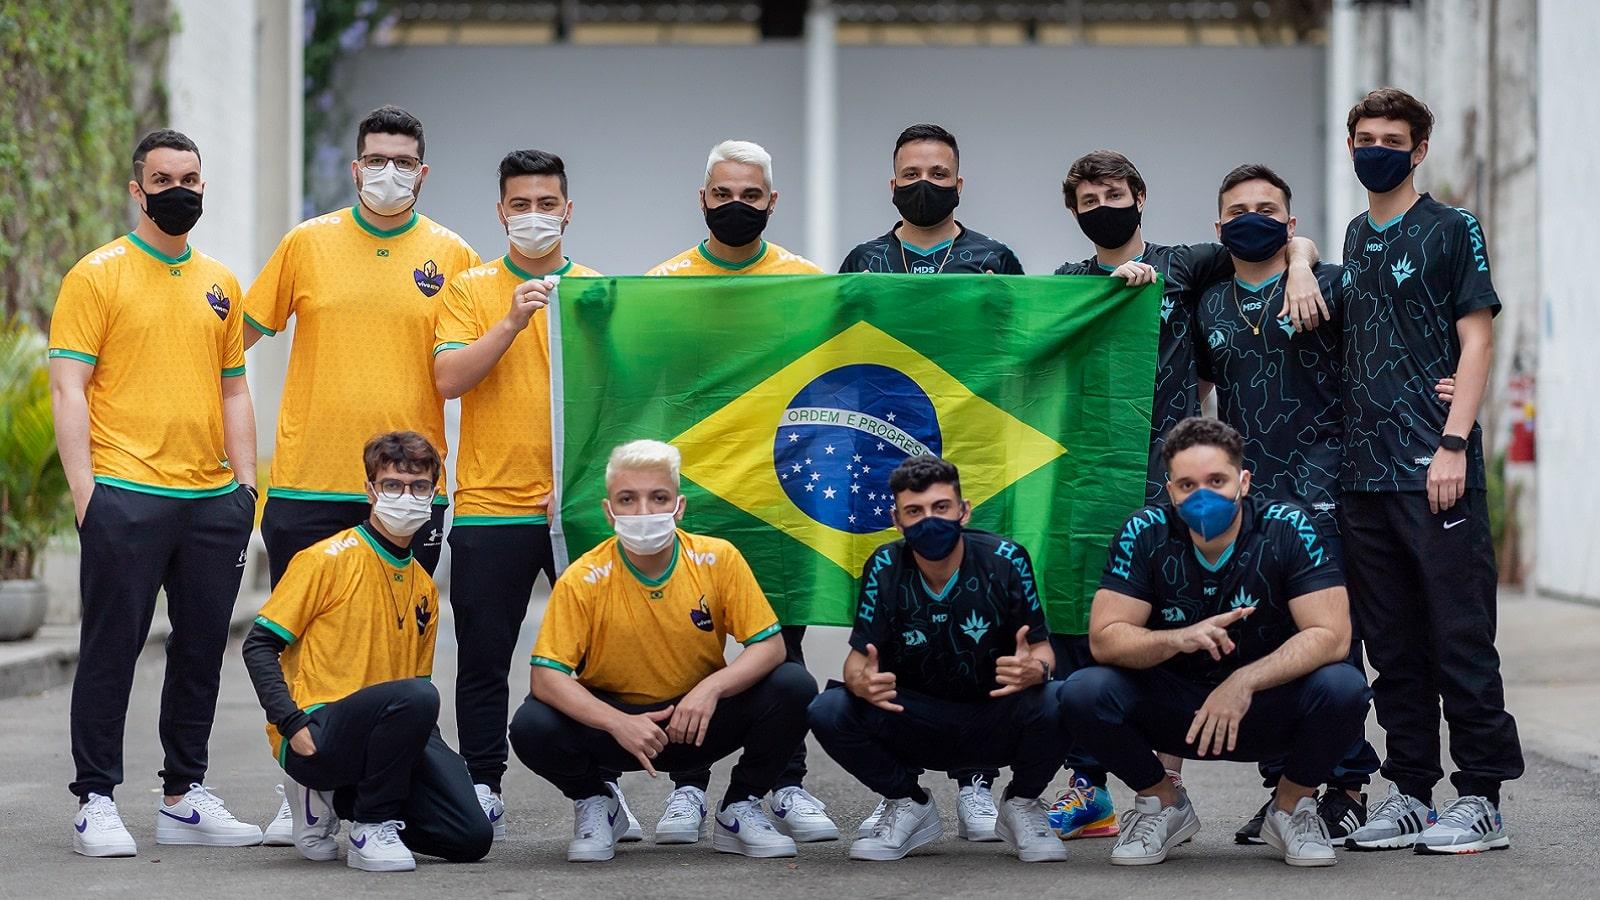 Team Liquid Brazil: Bringing the fire to Berlin